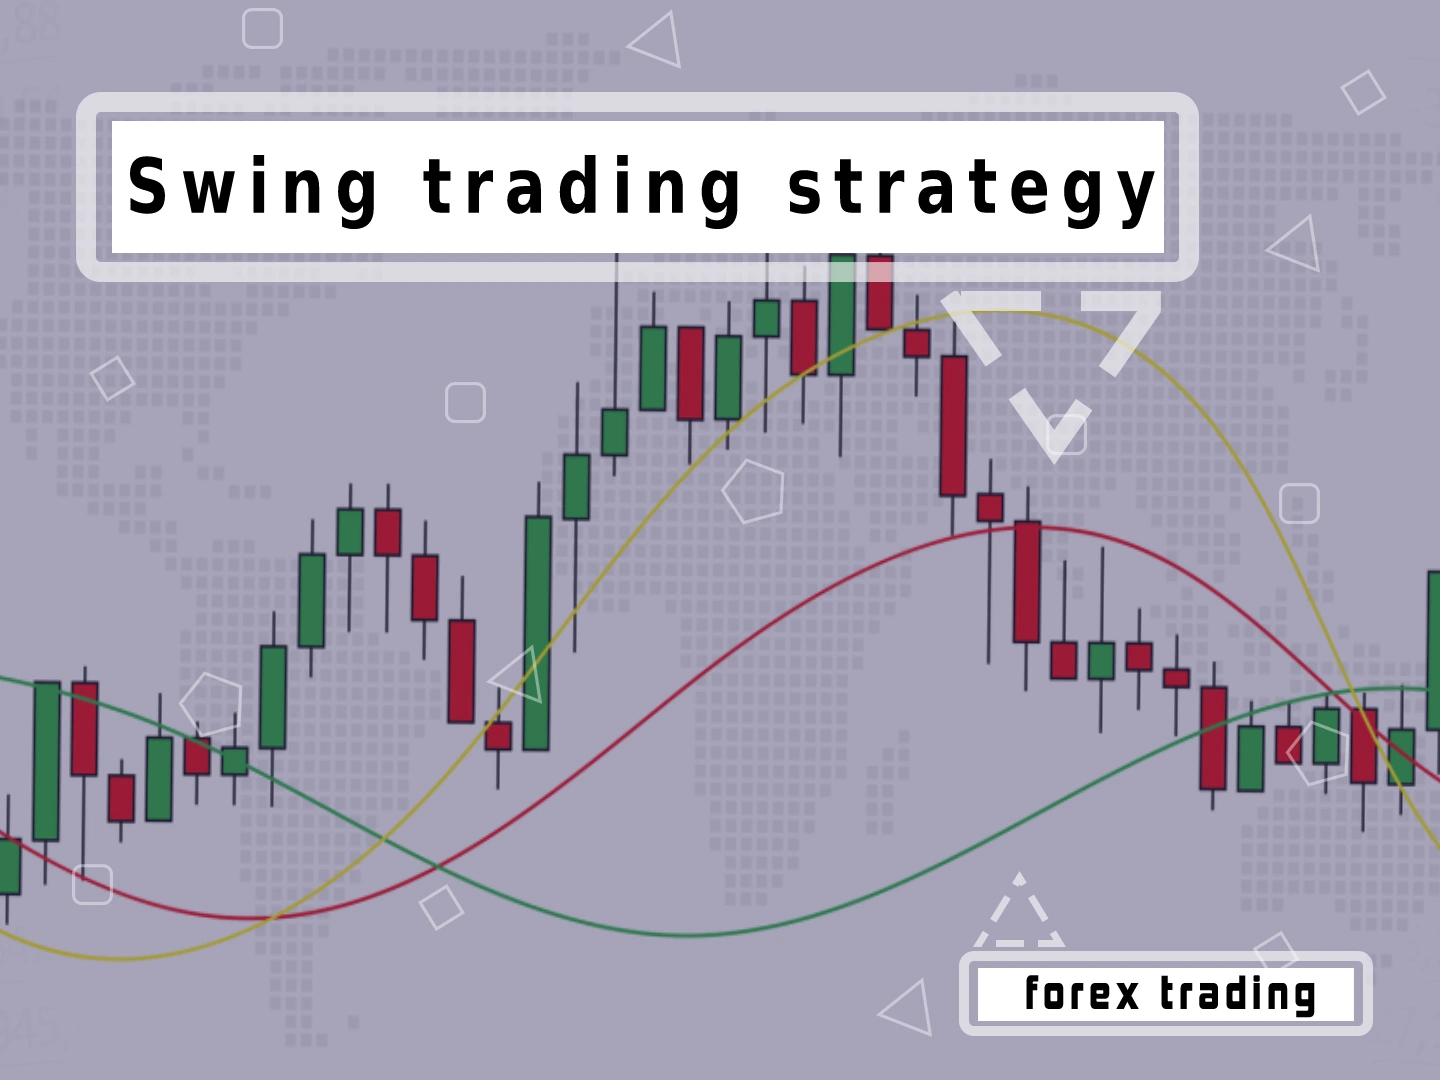 Trading strategies